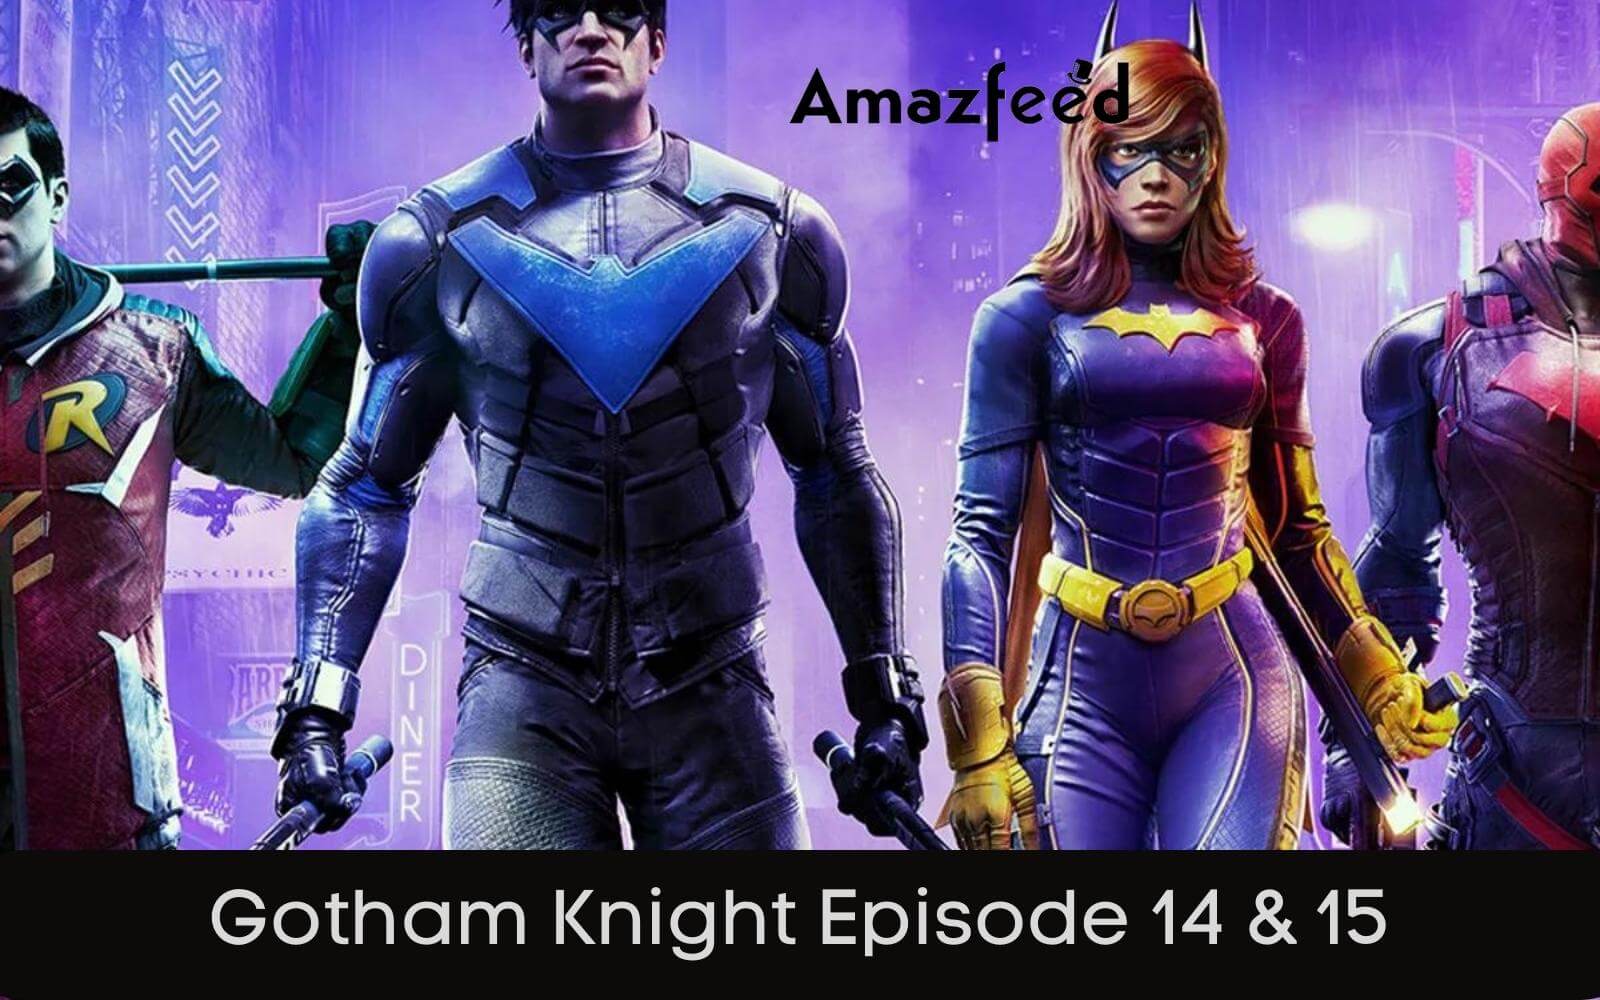 Gotham Knights release date leaked by Irish retailer? – Eggplante!